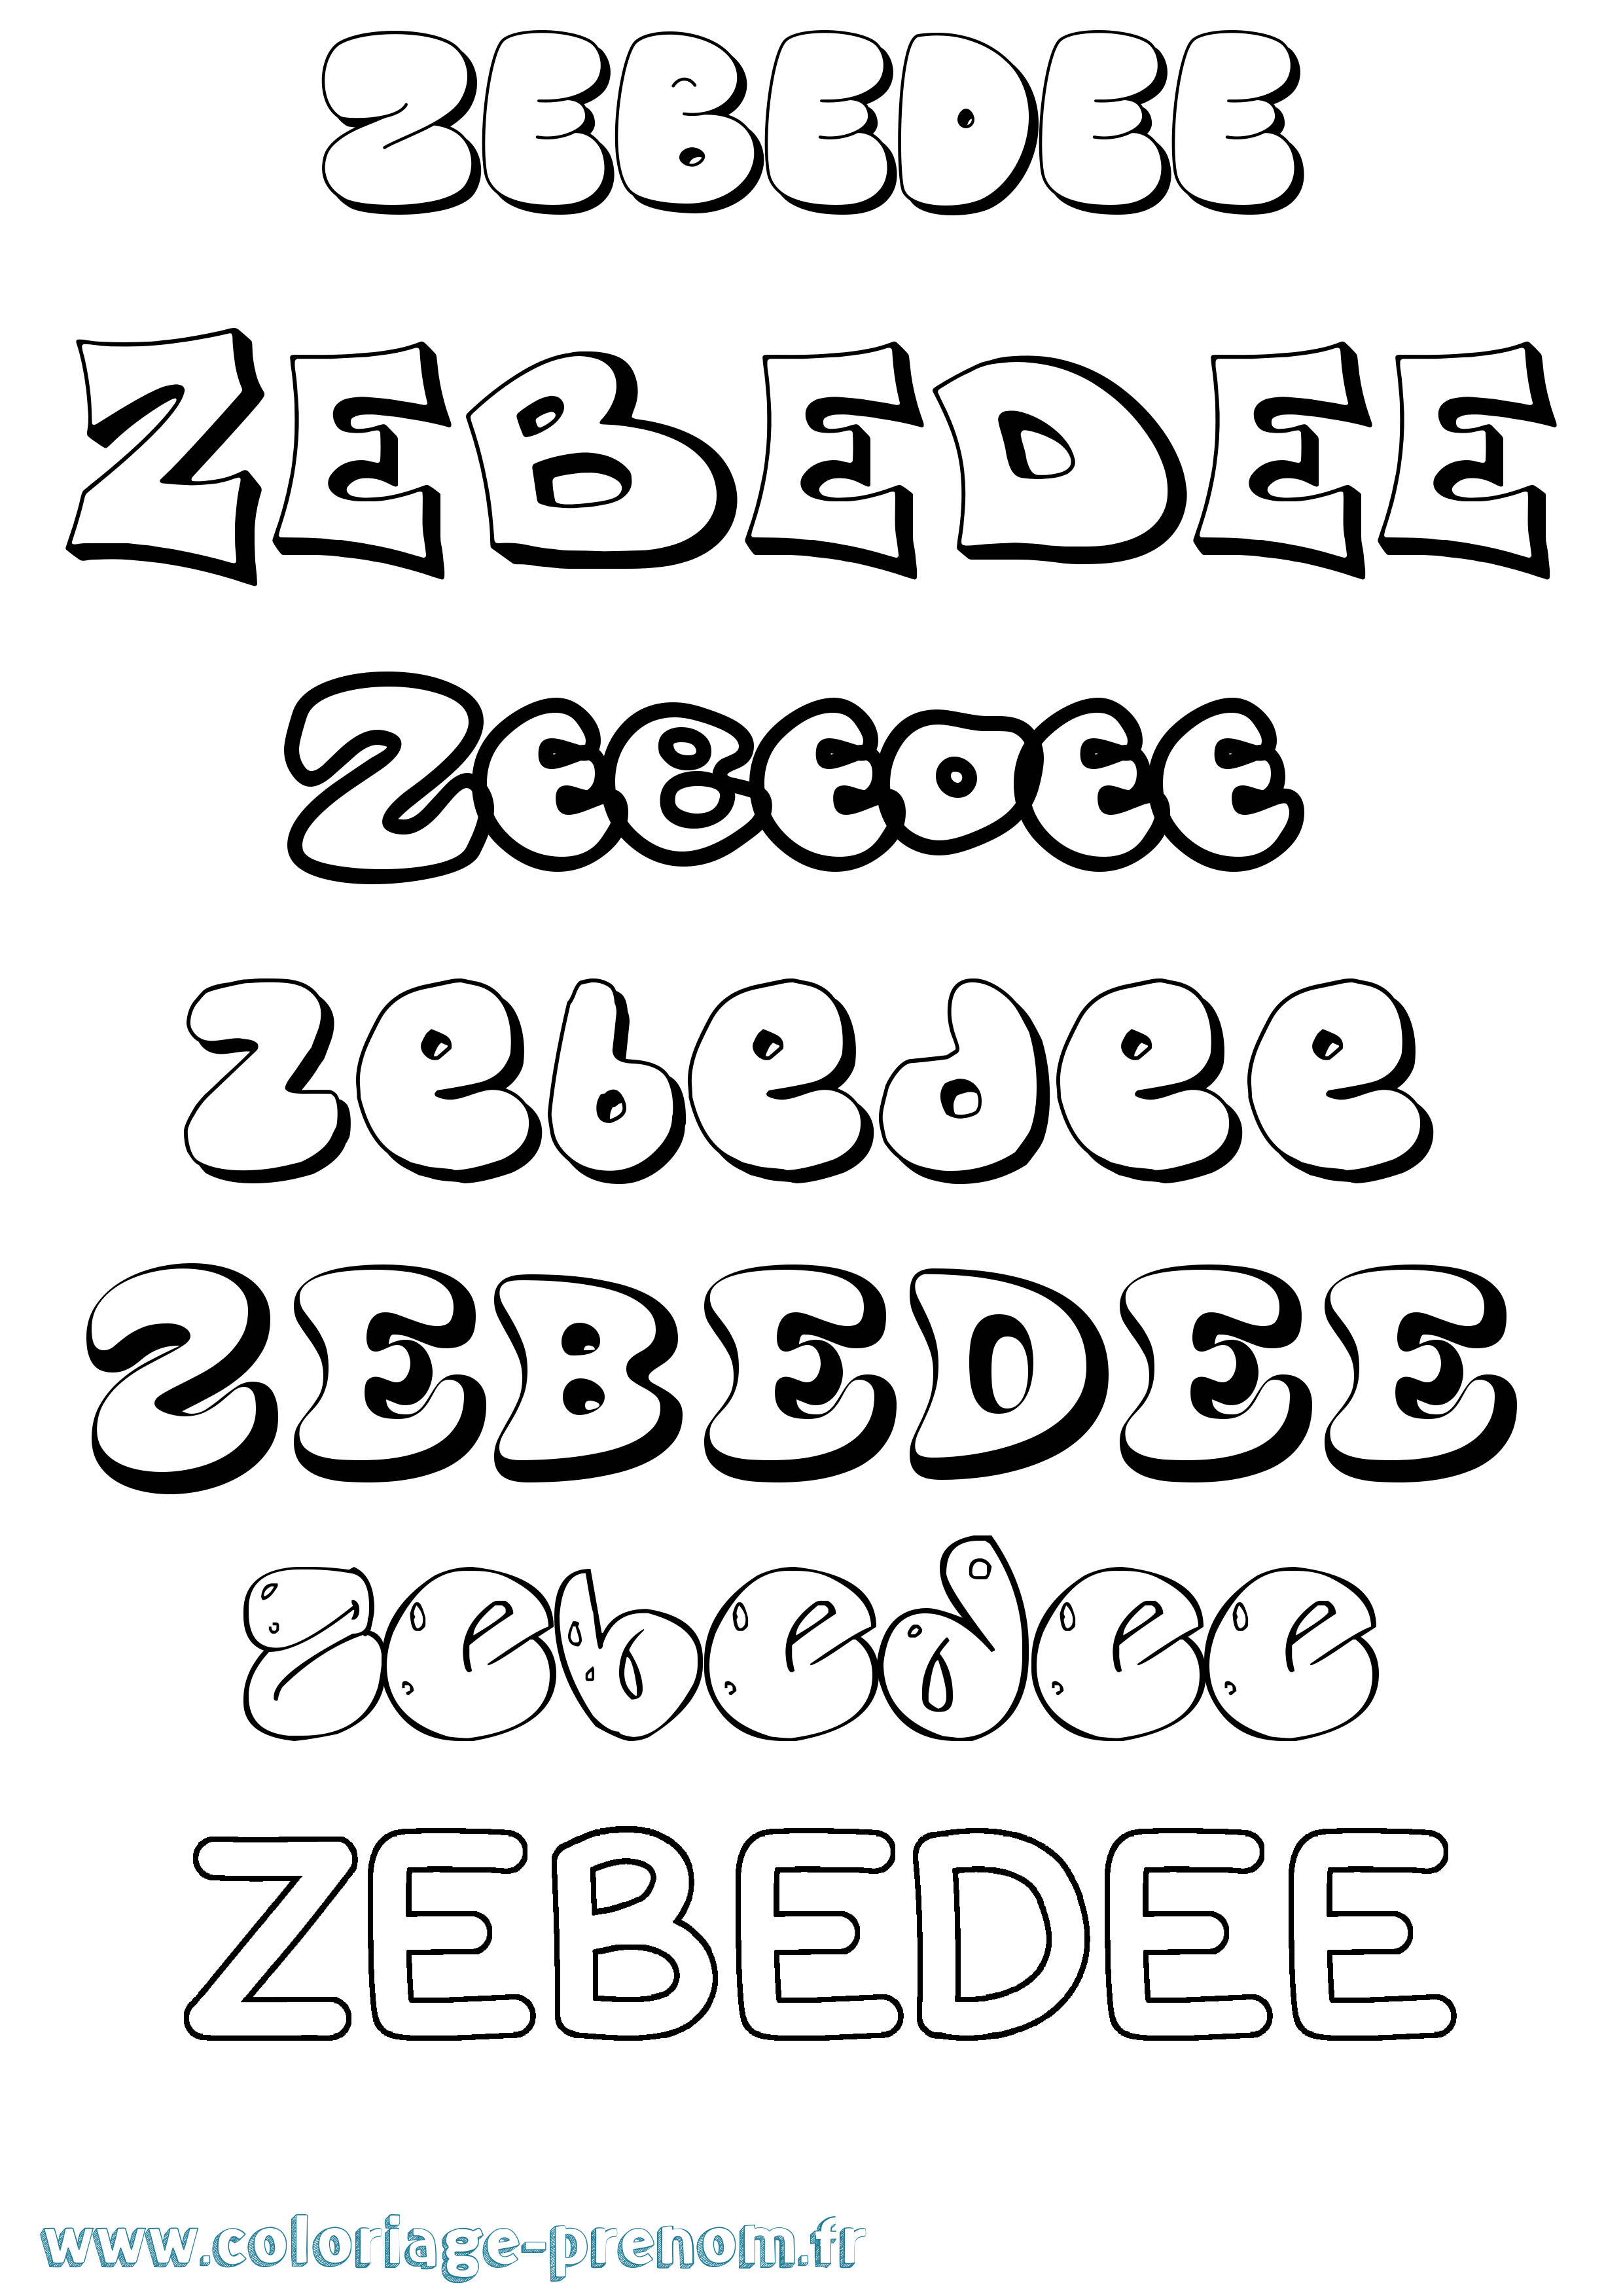 Coloriage prénom Zebedee Bubble